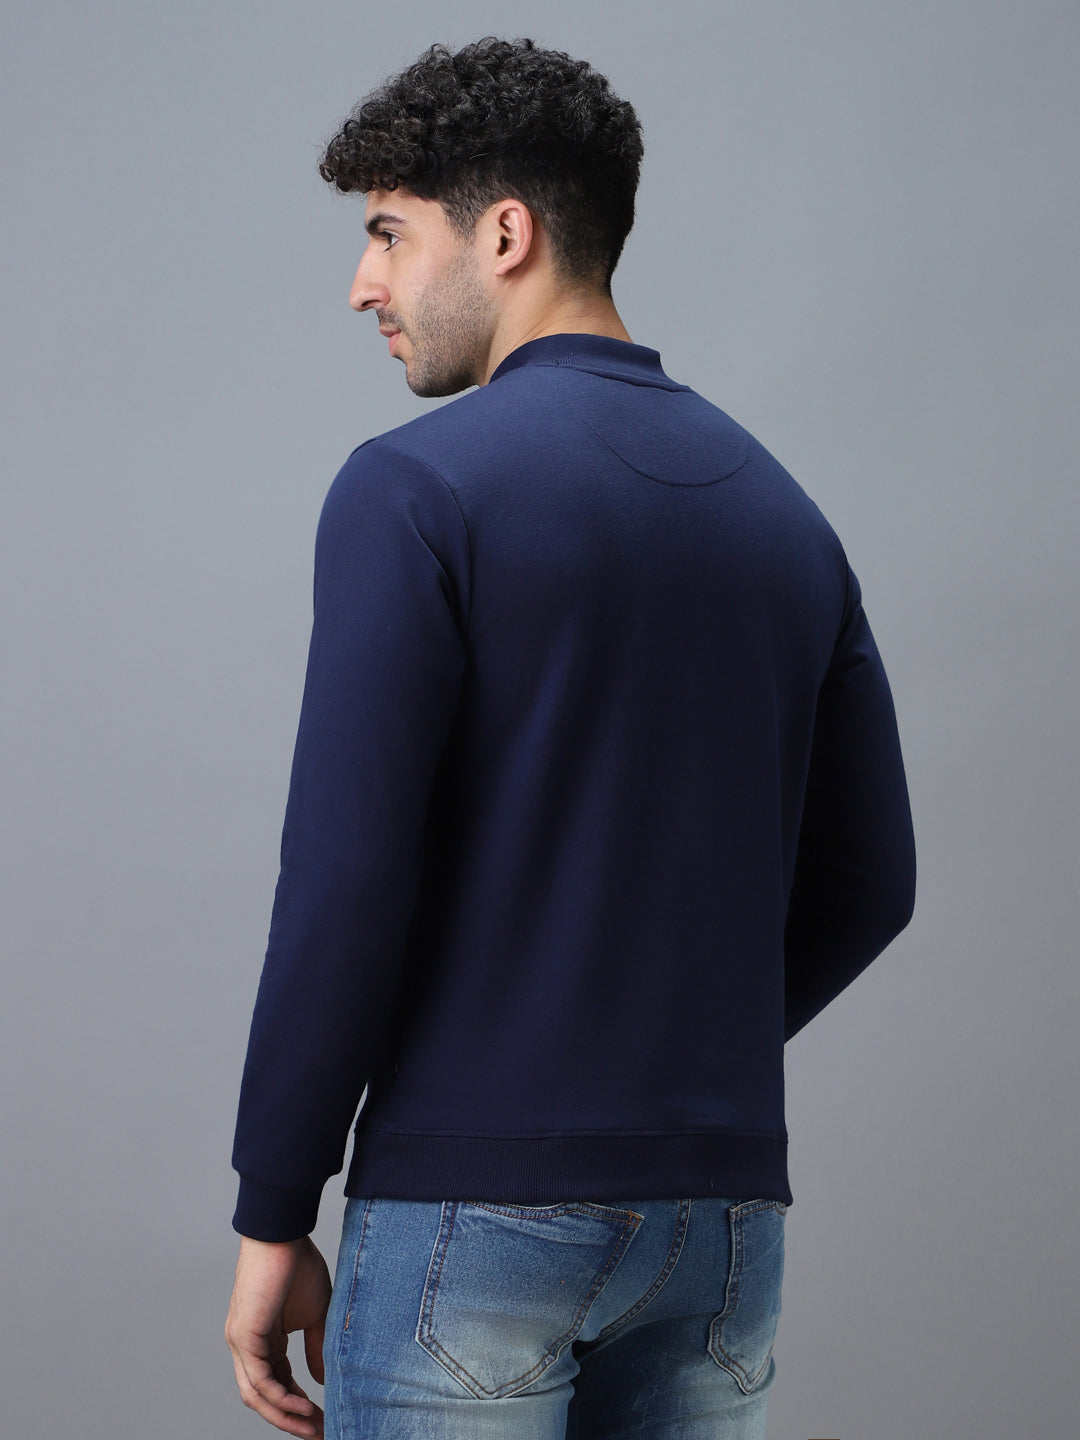 Men's Blue Cotton Solid Button High Neck Sweatshirt